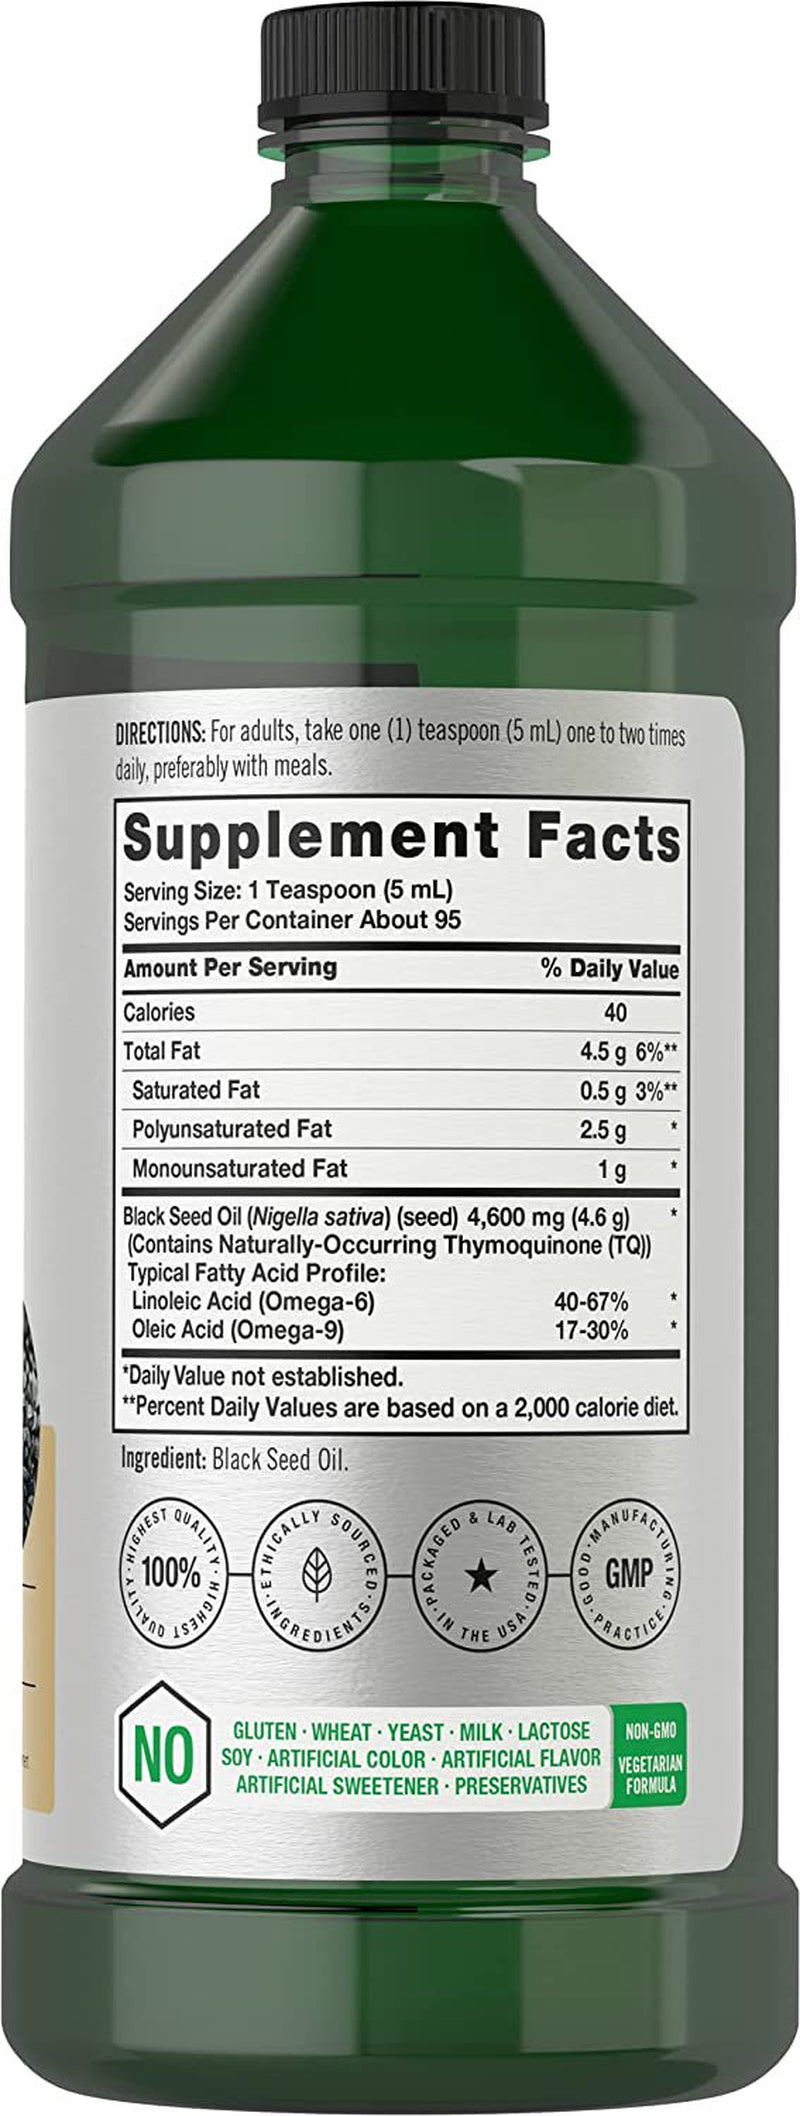 Black Seed Oil | 4600Mg | 16 Oz | Vegetarian Formula | by Horbaach